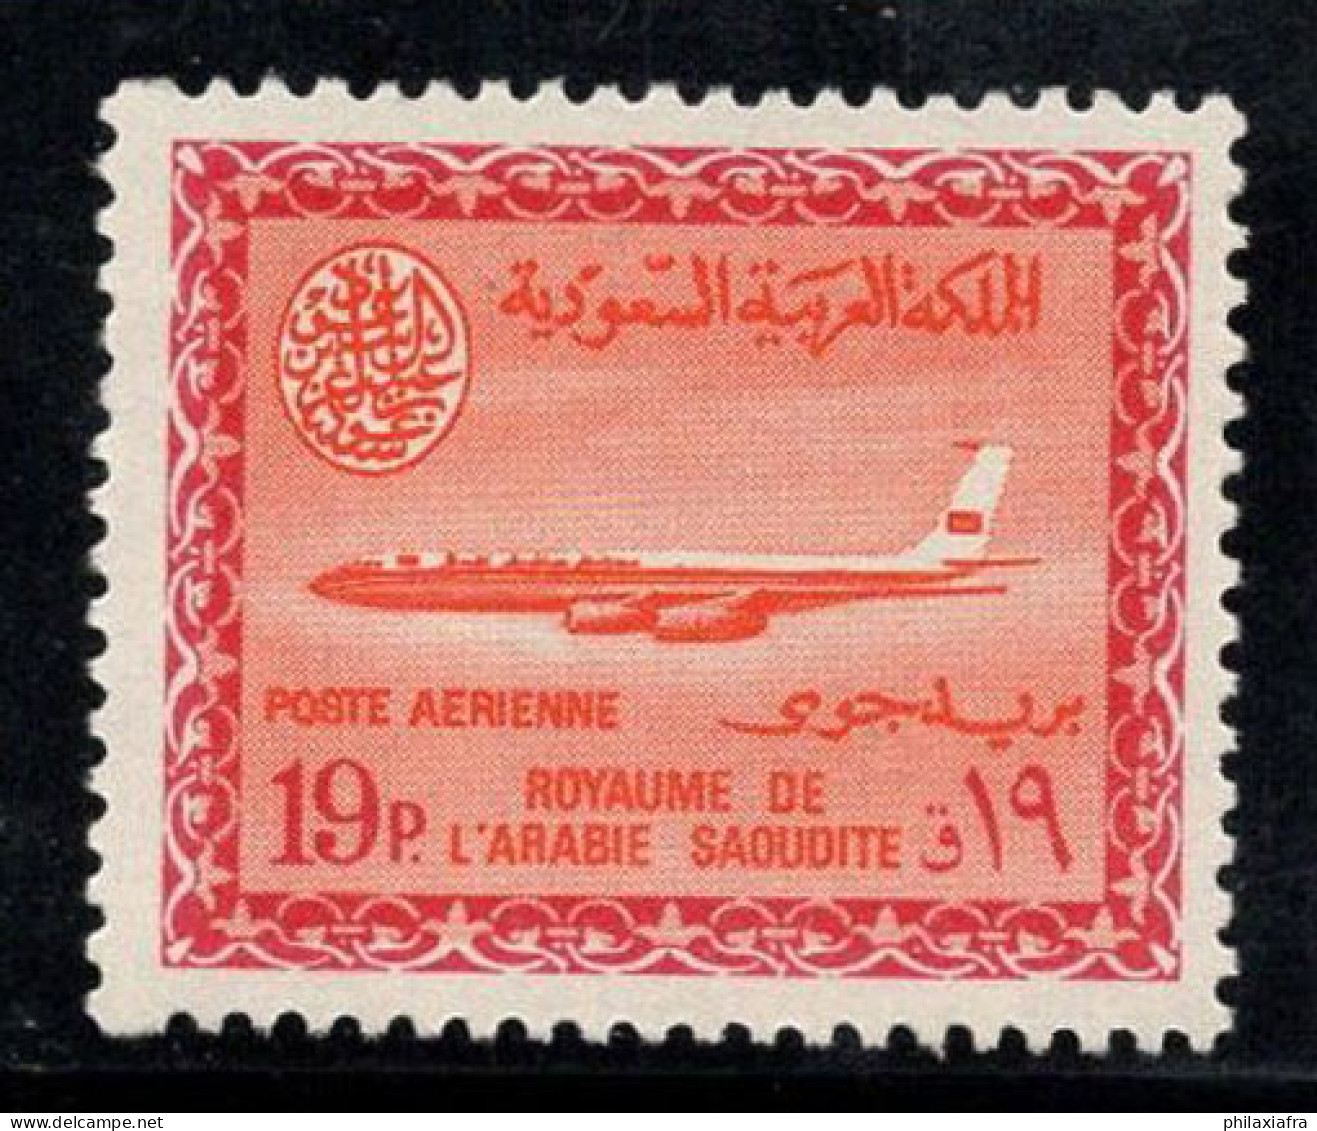 Arabie Saoudite 1965-72 Mi. 259 Neuf ** 100% Poste Aérienne 19 Pia, Boeing 720 B - Saudi Arabia